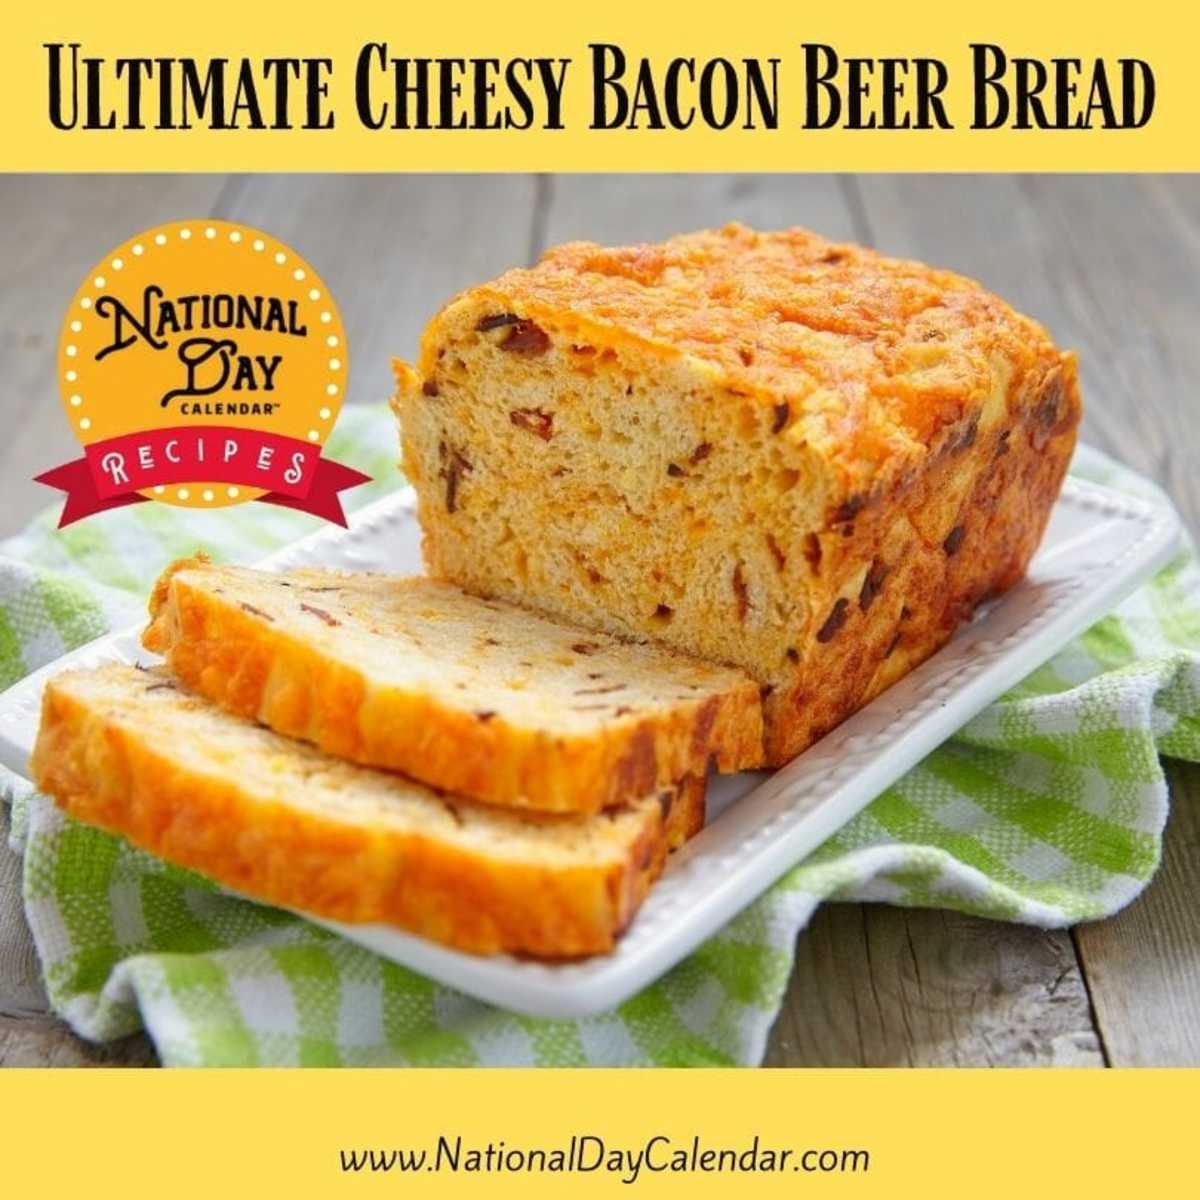 Ultimate Cheesy Bacon Beer Bread